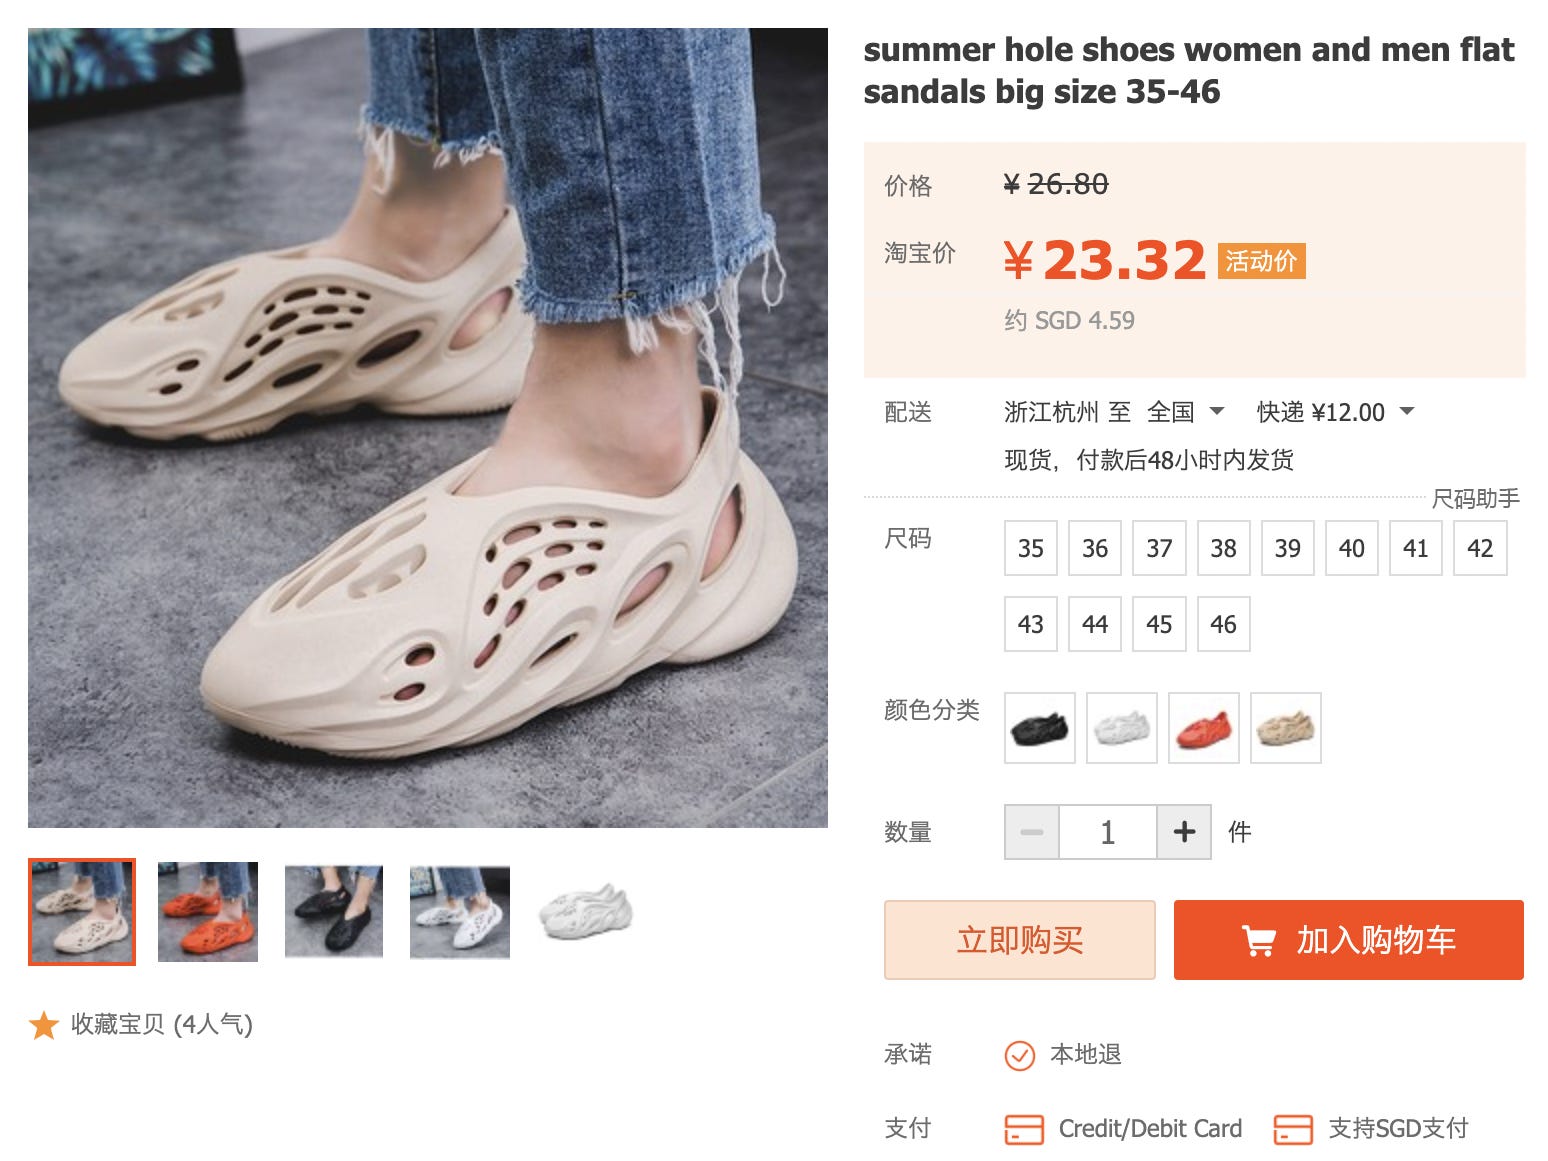 Taobaos Version des Yeezy Foam Runner.